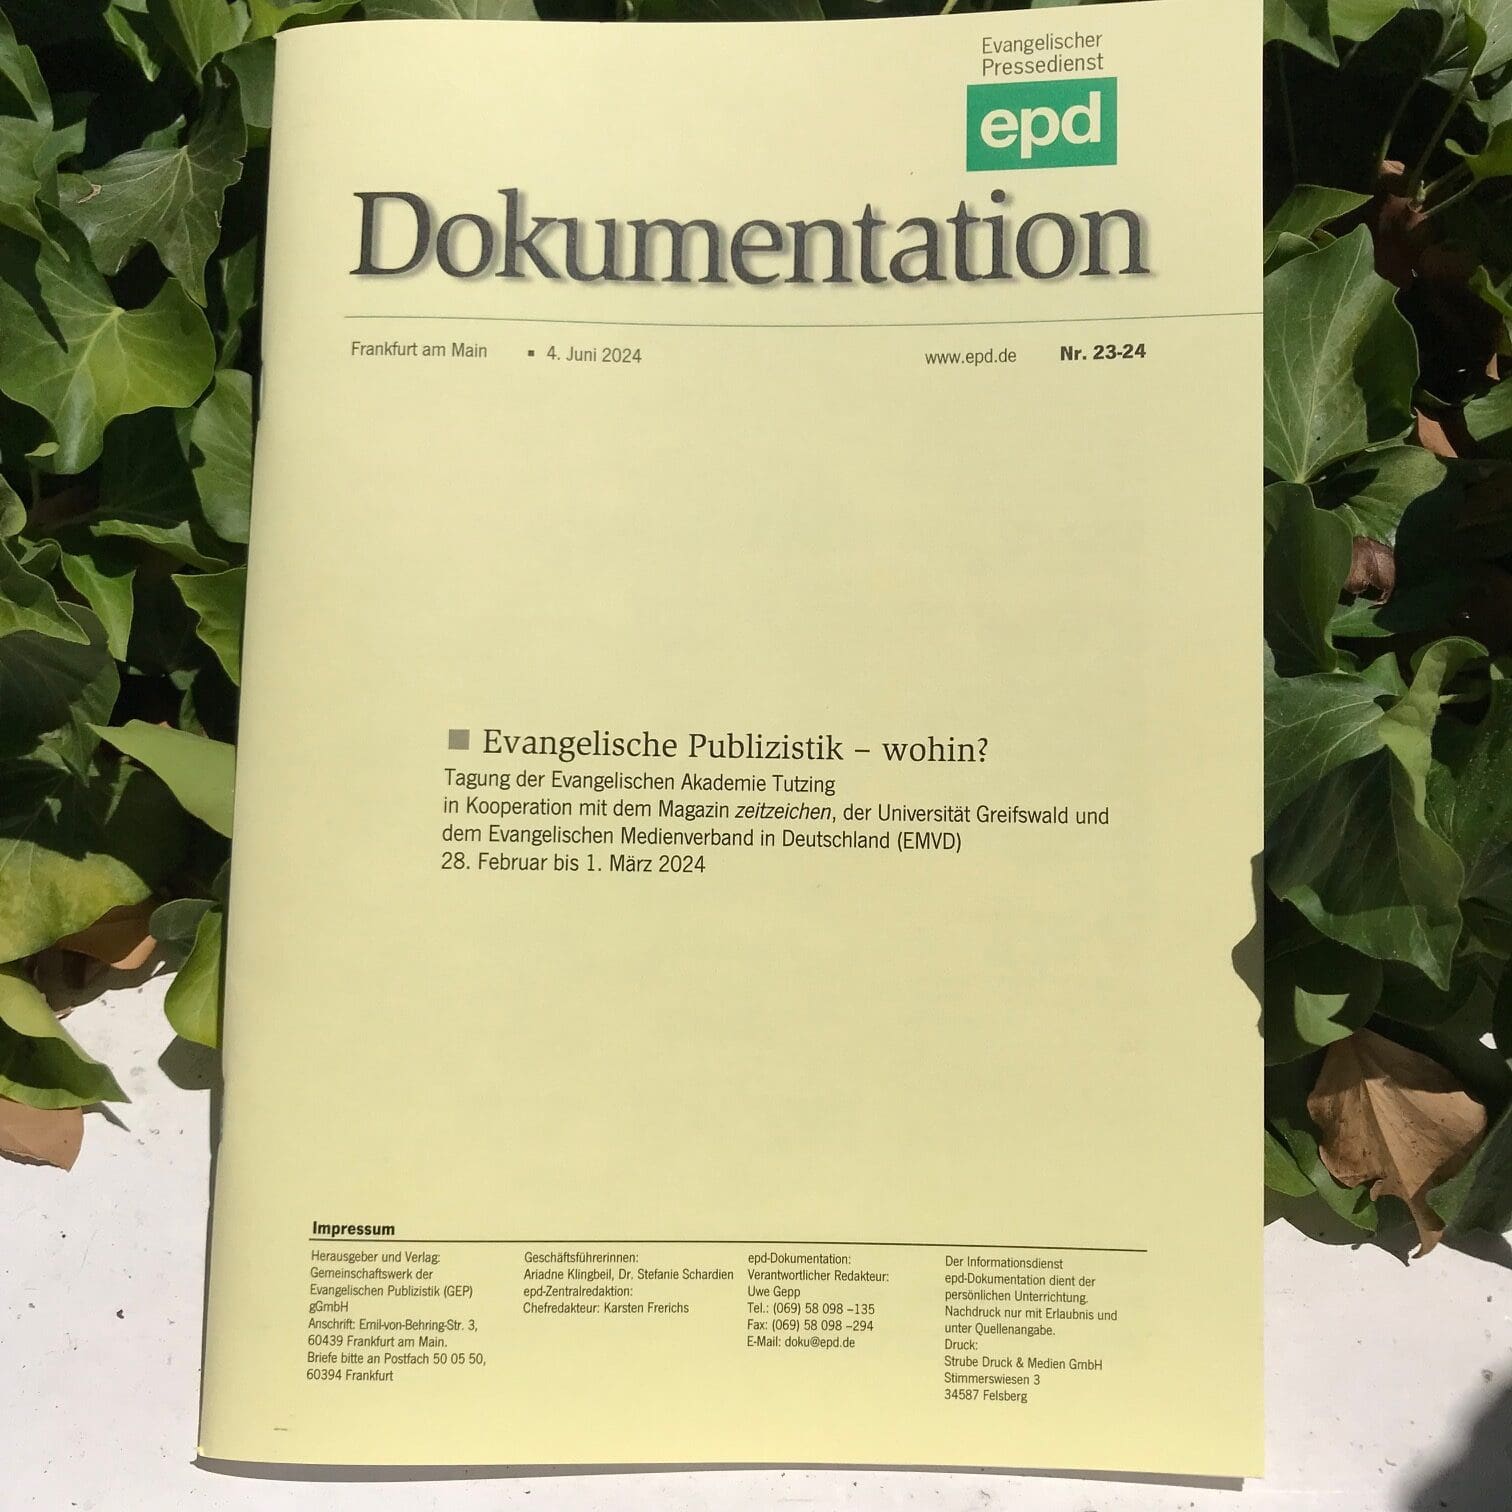 EPD-Dokumentation: "Evangelische Publizistik - wohin?" Juni 2024 Foto: dgr / eat archiv